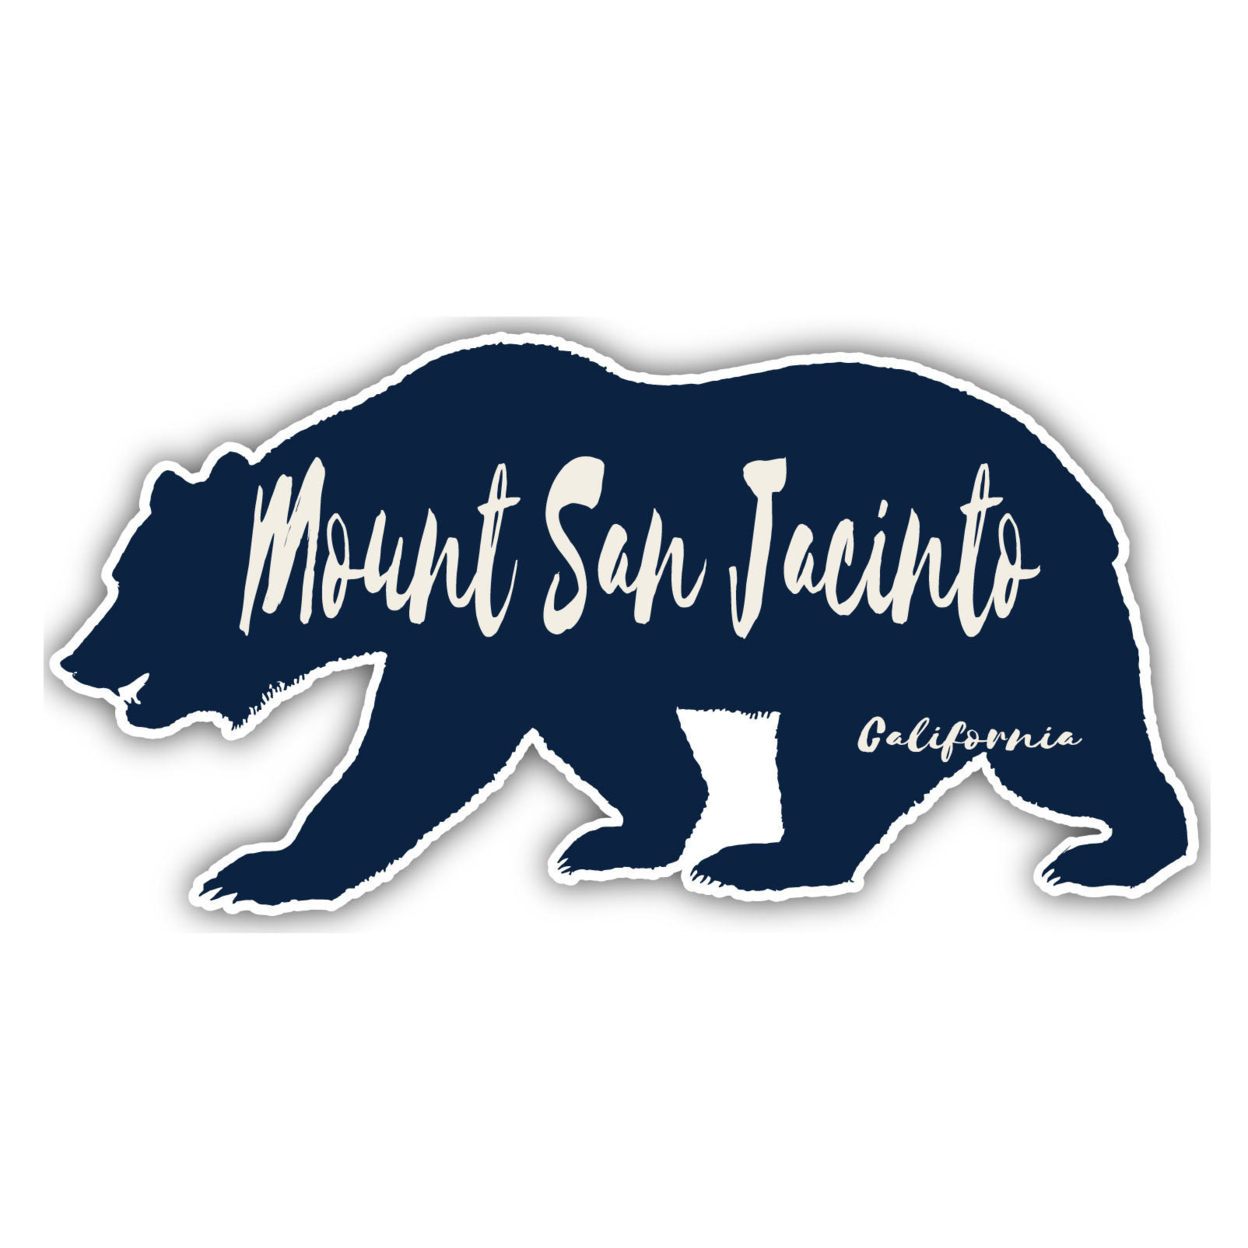 Mount San Jacinto California Souvenir Decorative Stickers (Choose Theme And Size) - Single Unit, 2-Inch, Camp Life